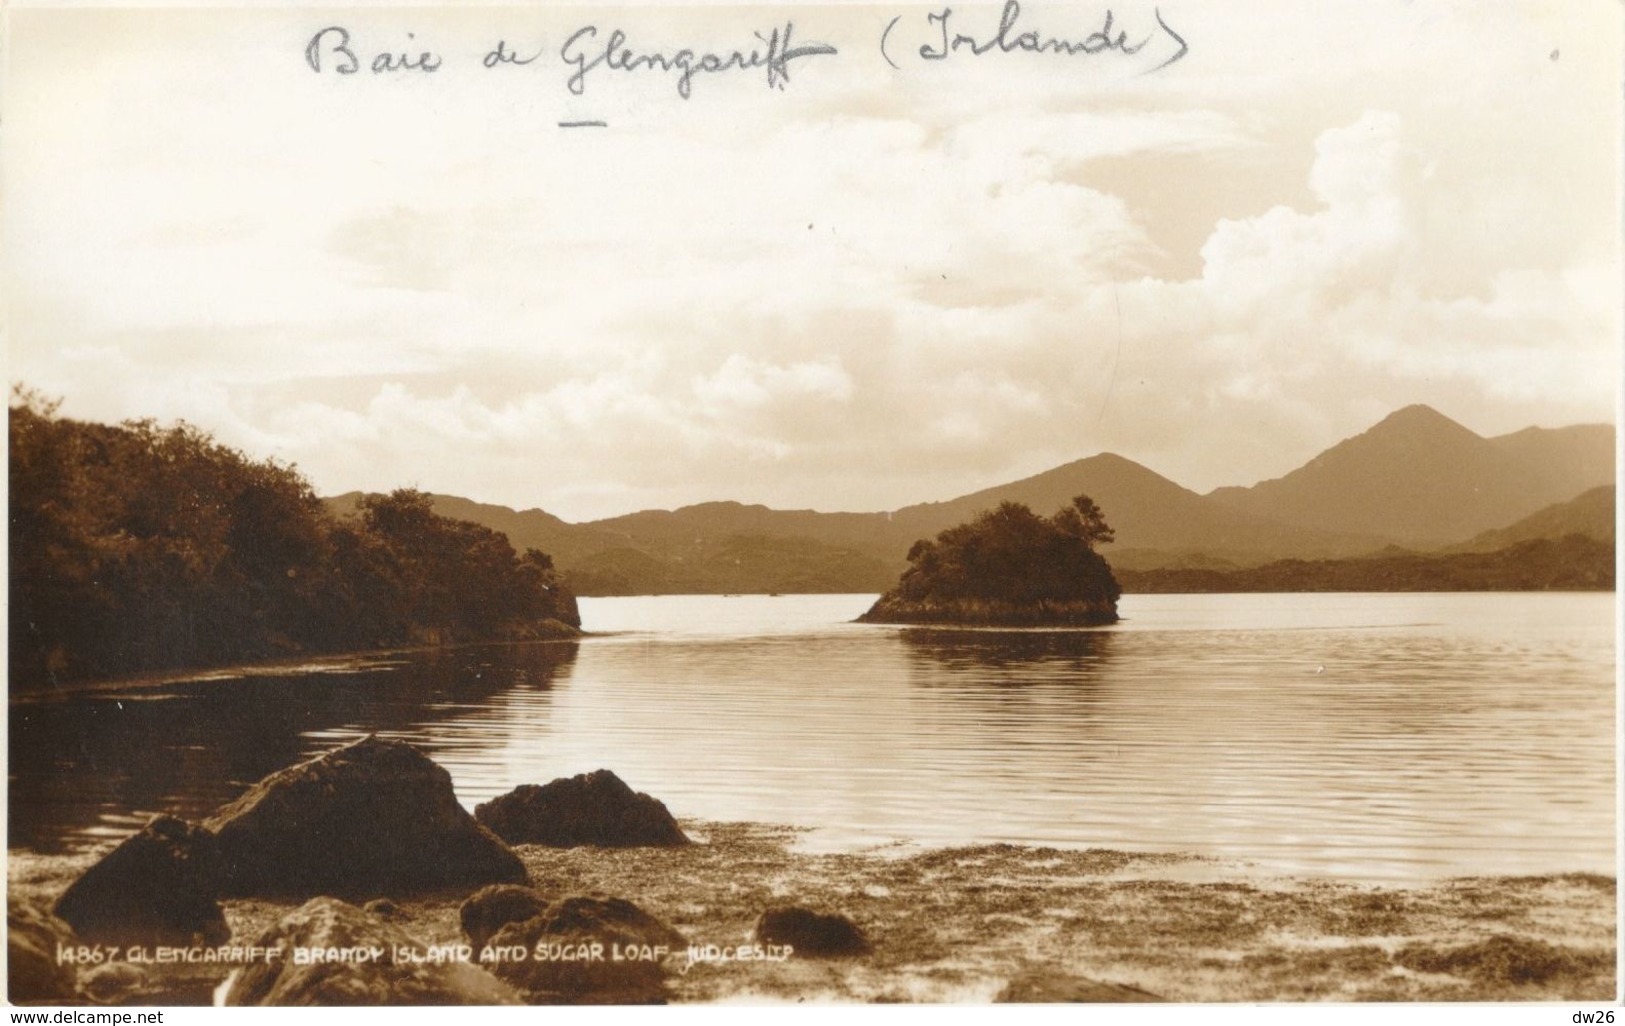 Baie De Glengariff (Irlande) Glengarriff Brandy Island Sugar Loaf - Judges Ltd - Carte Non Circulée - Cork